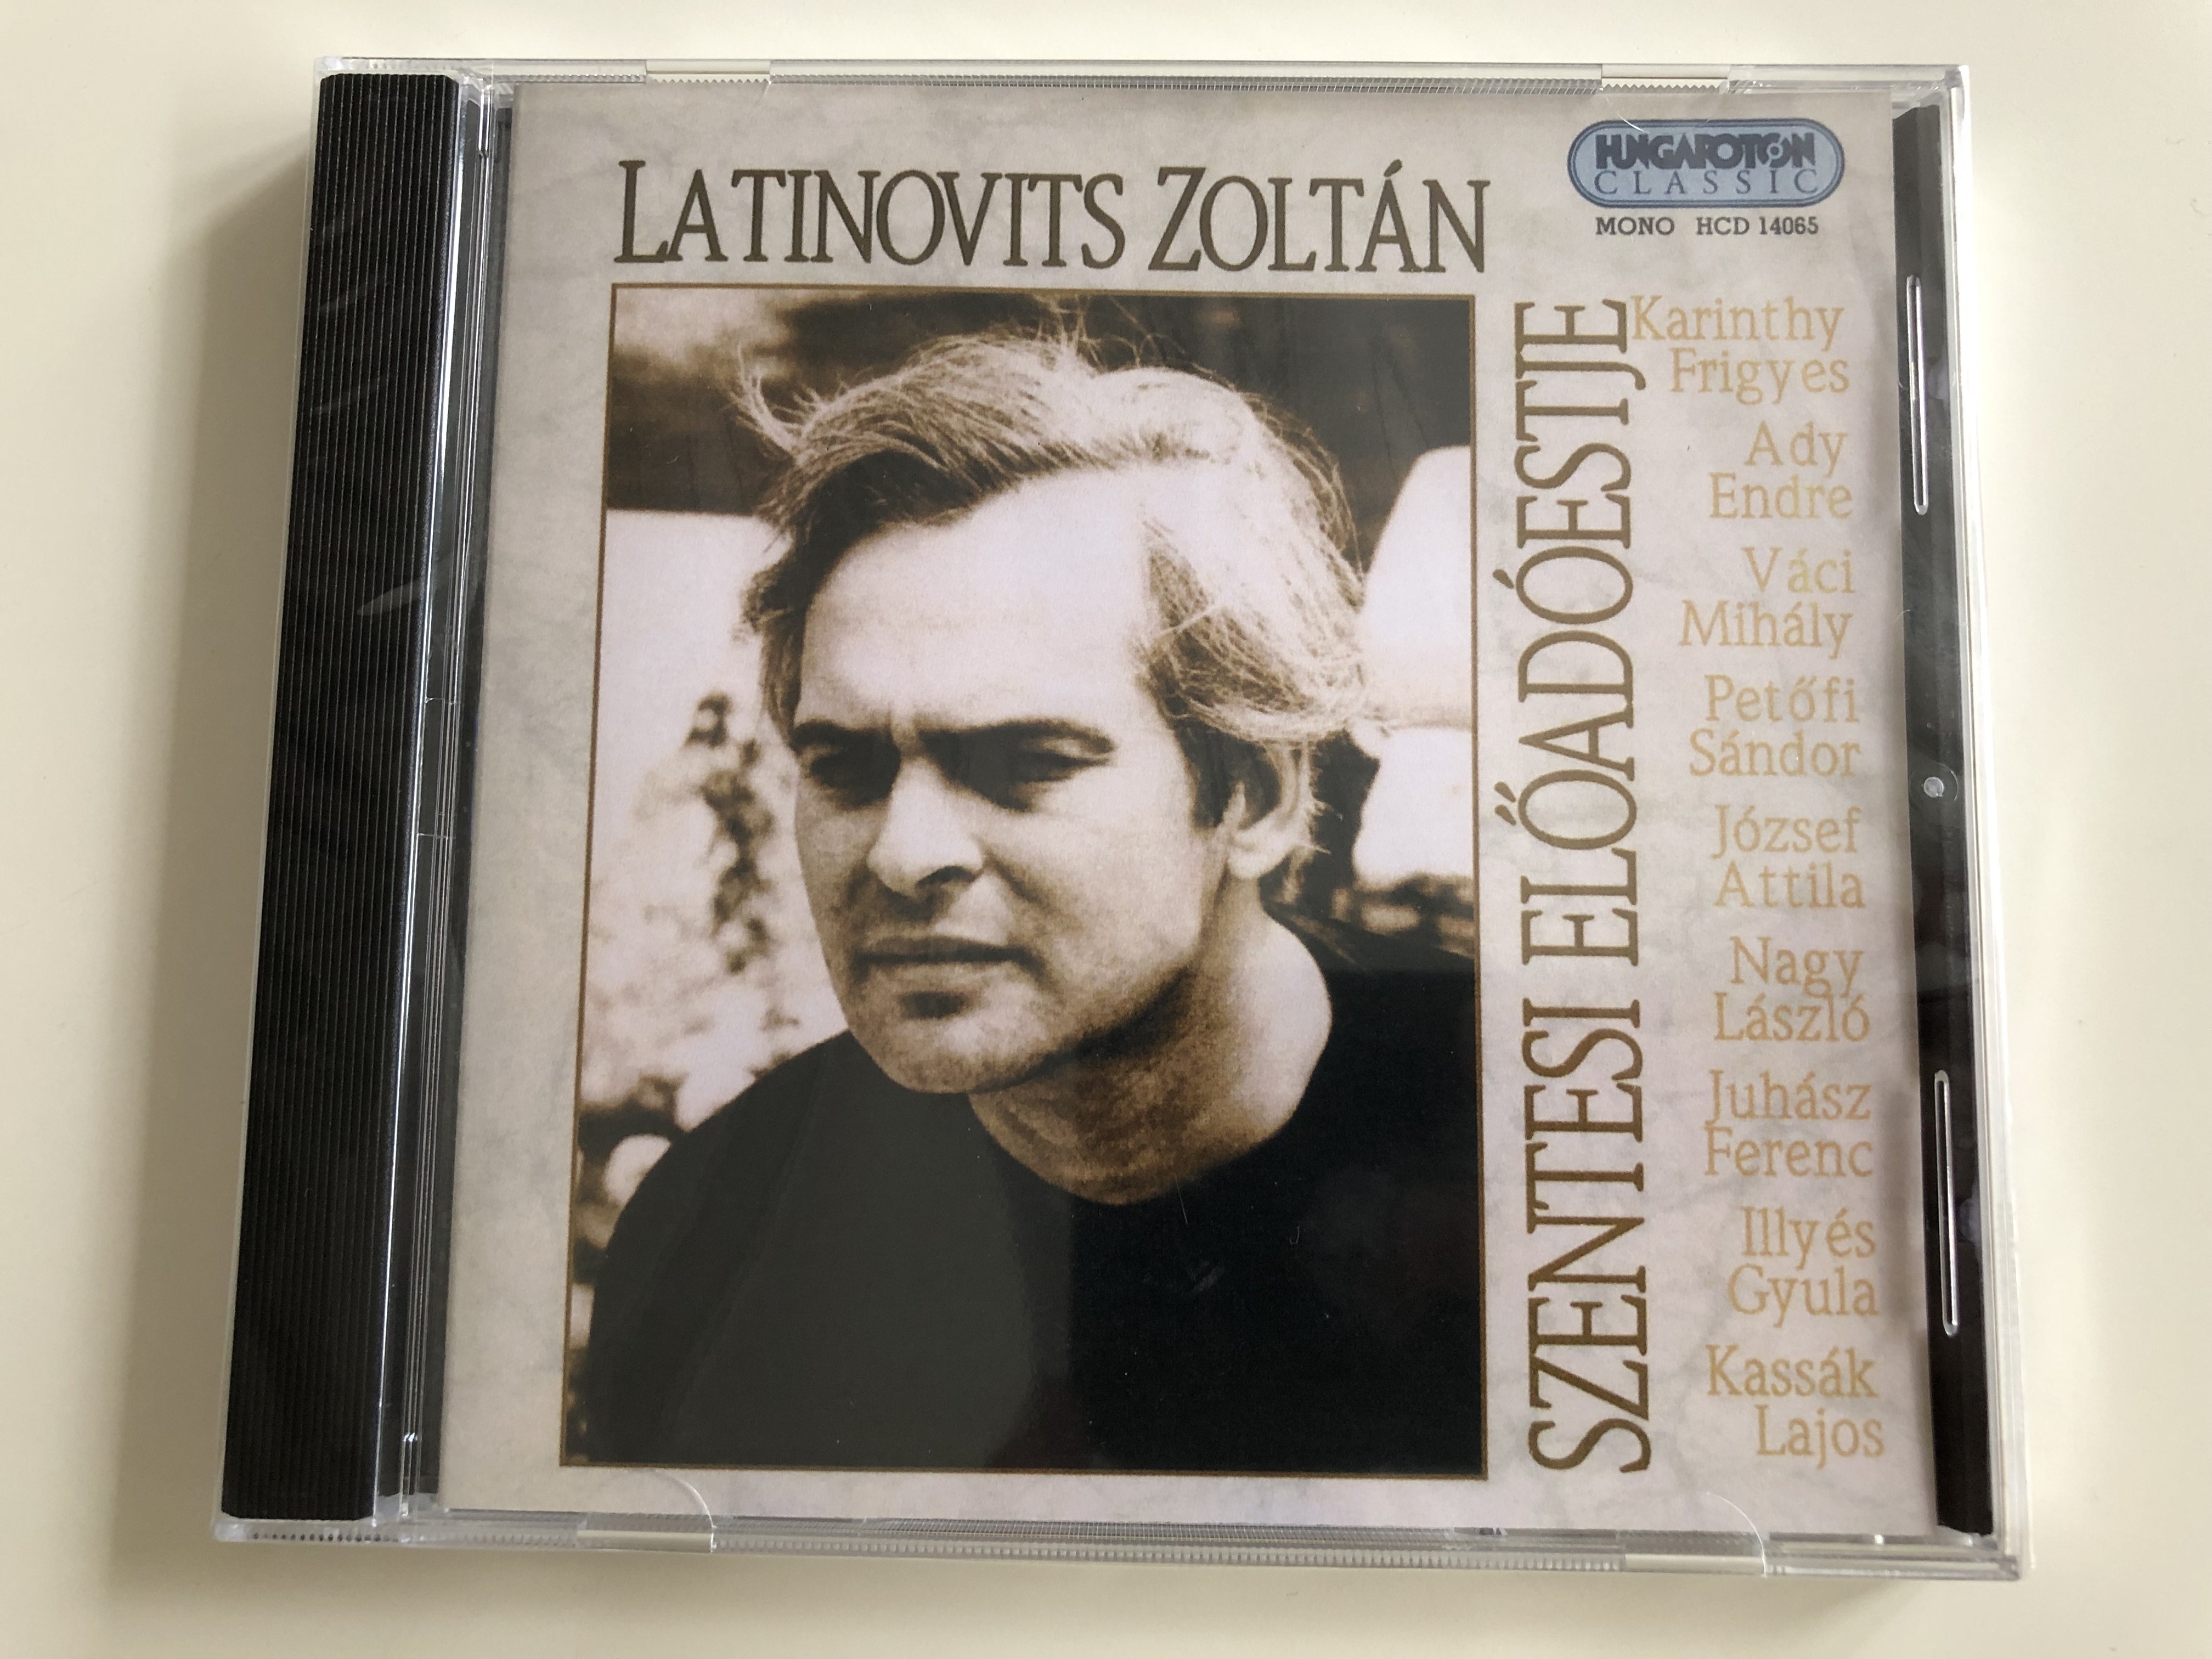 latinovits-zolt-n-szentesi-el-ad-estje-karinthy-ady-v-ci-pet-fi-j-zsef-attila-illy-s-gyula-kass-k-hungaroton-classic-audio-cd-1988-2001-hcd-14065-1-.jpg